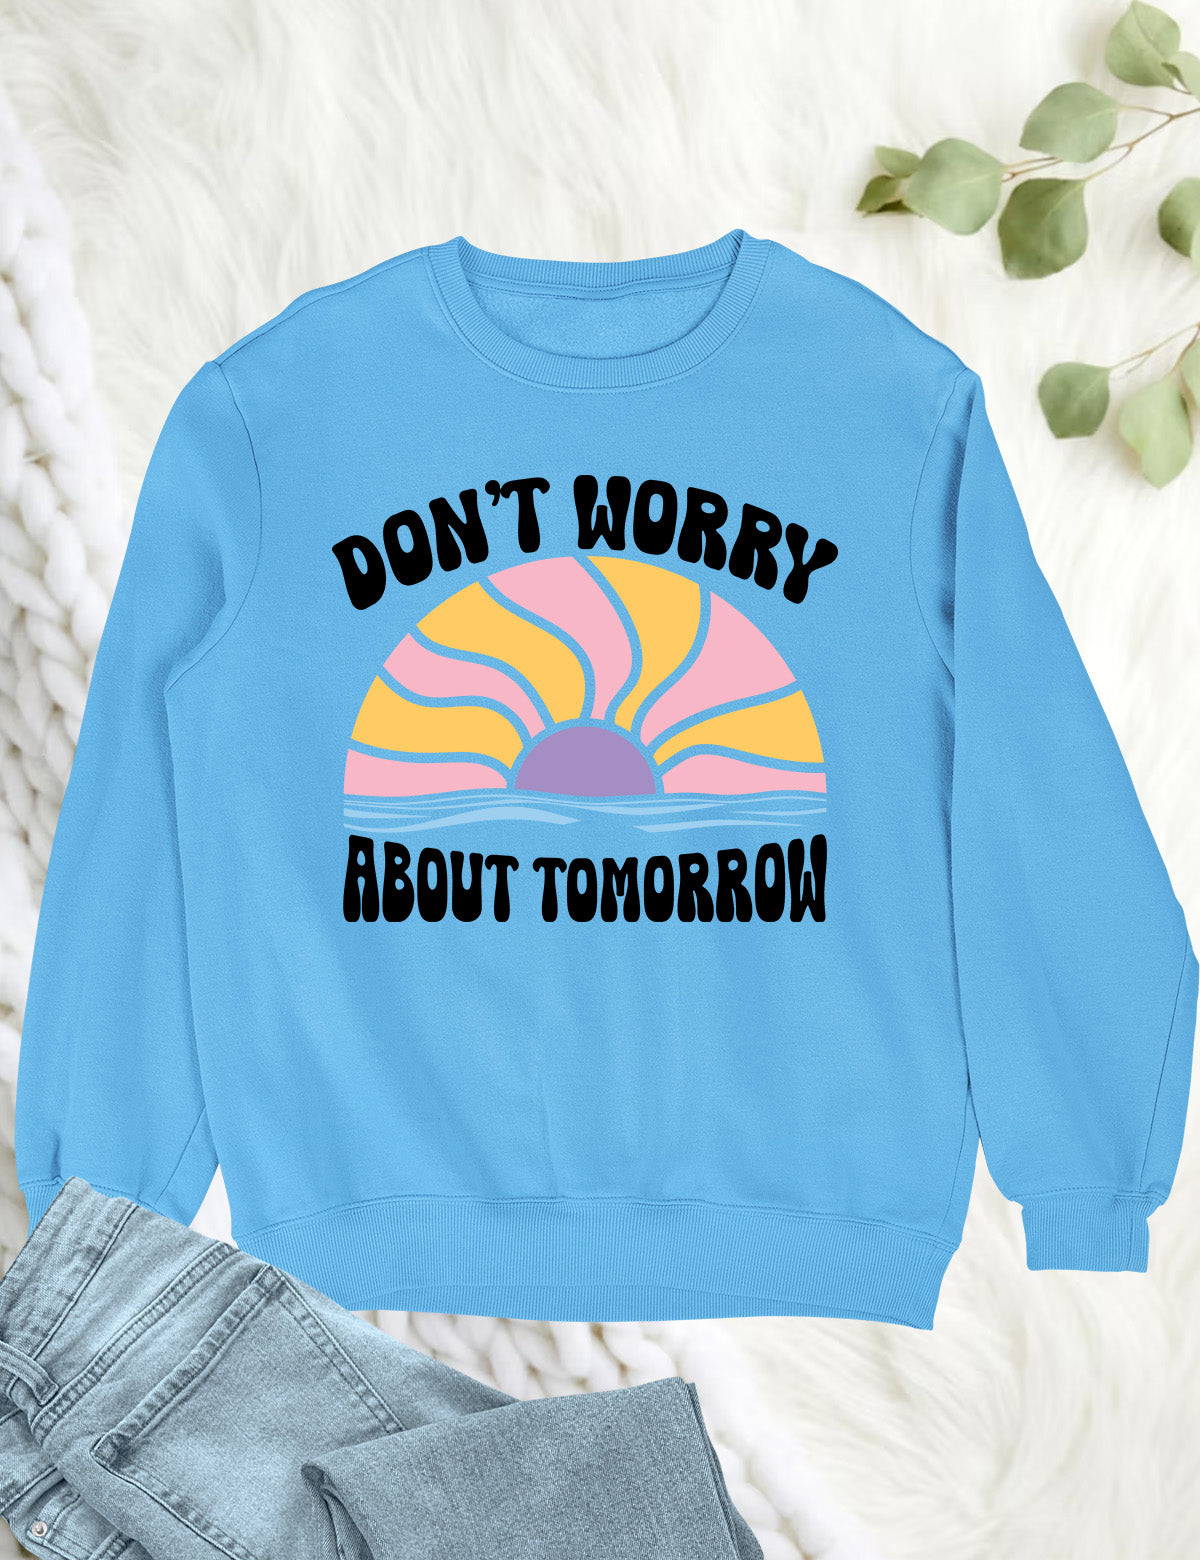 Don't Worry About Tomorrow Faith Based Christian Clothing Sweatshirts